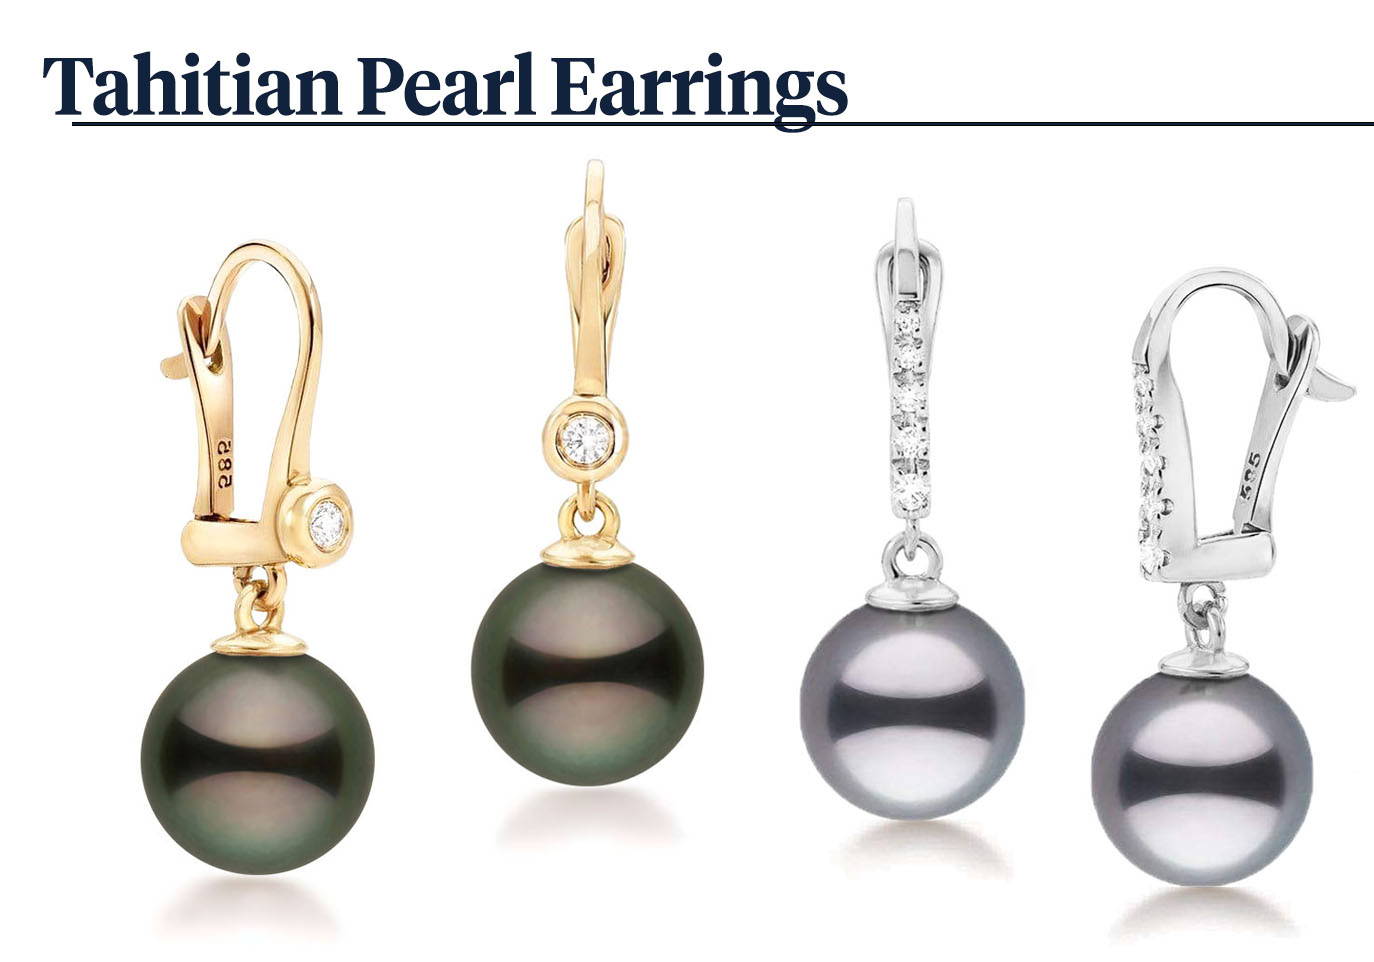 Tahitian Pearl Jewelry Styles: Pearl Earrings